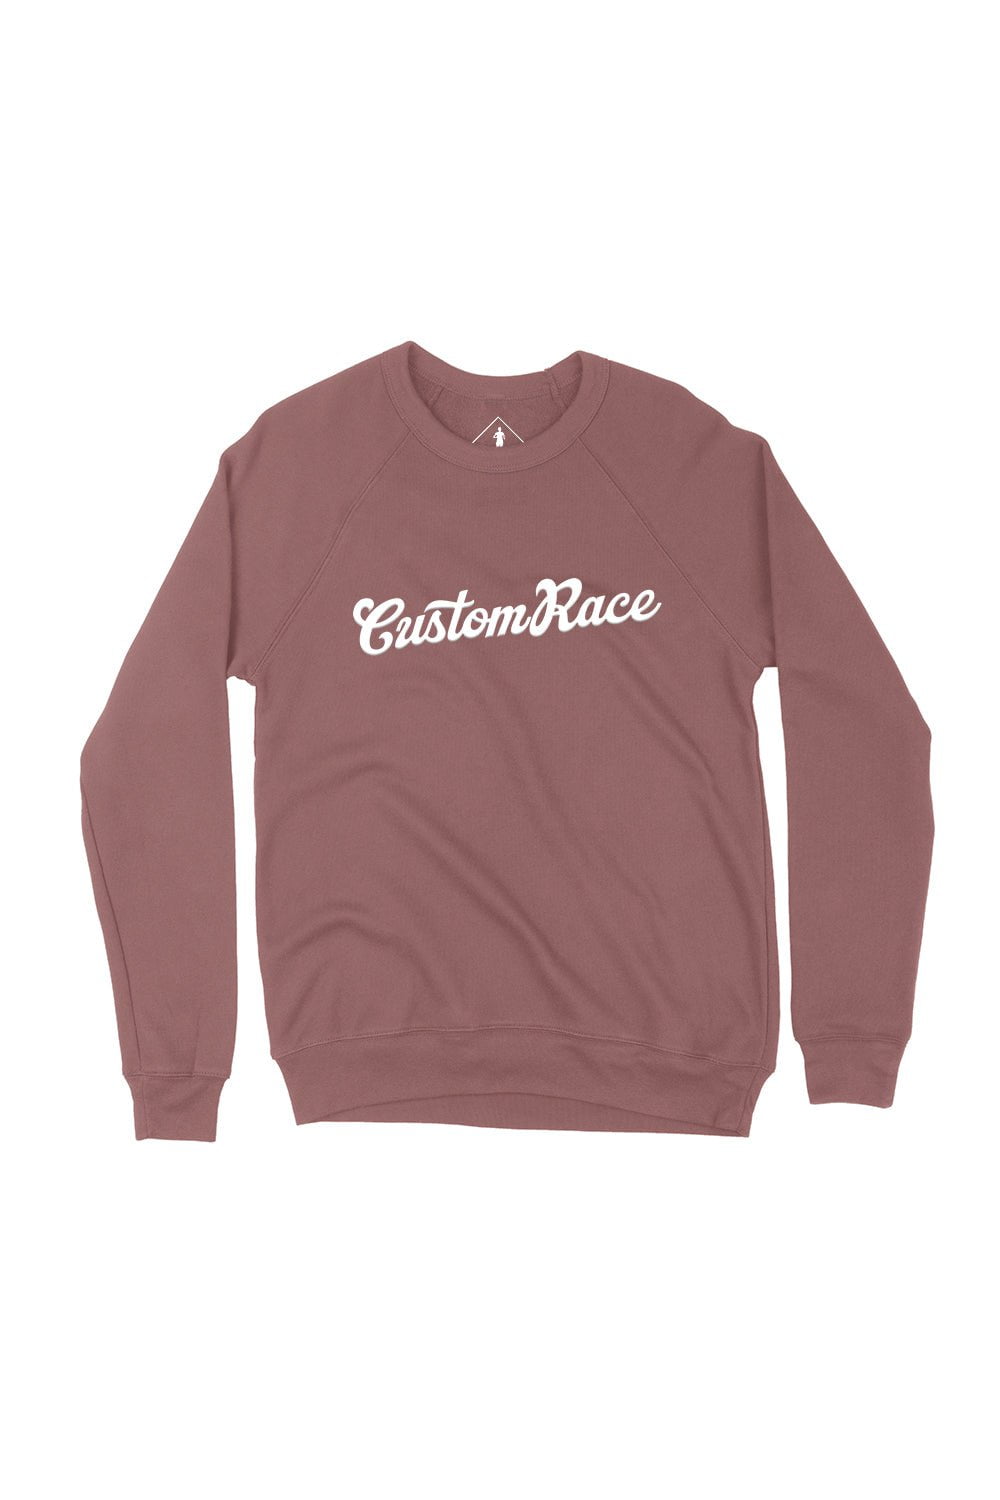 Sarah Marie Design Studio Sweatshirt Custom Race/City Sweatshirt